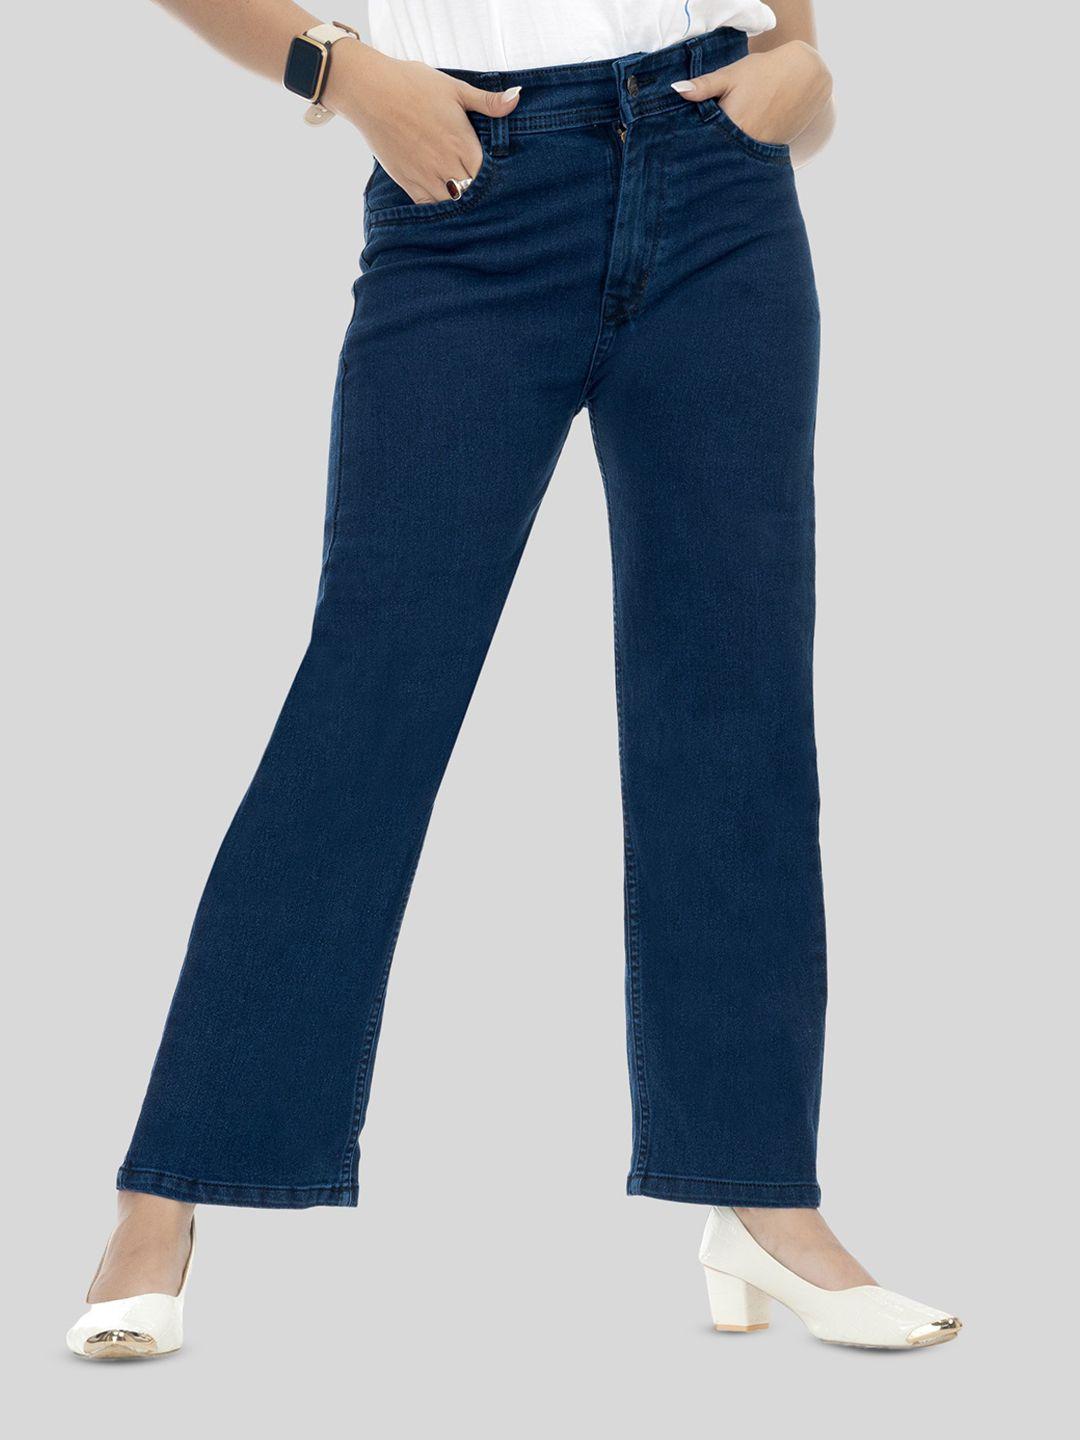 baesd women jean straight fit cotton jeans